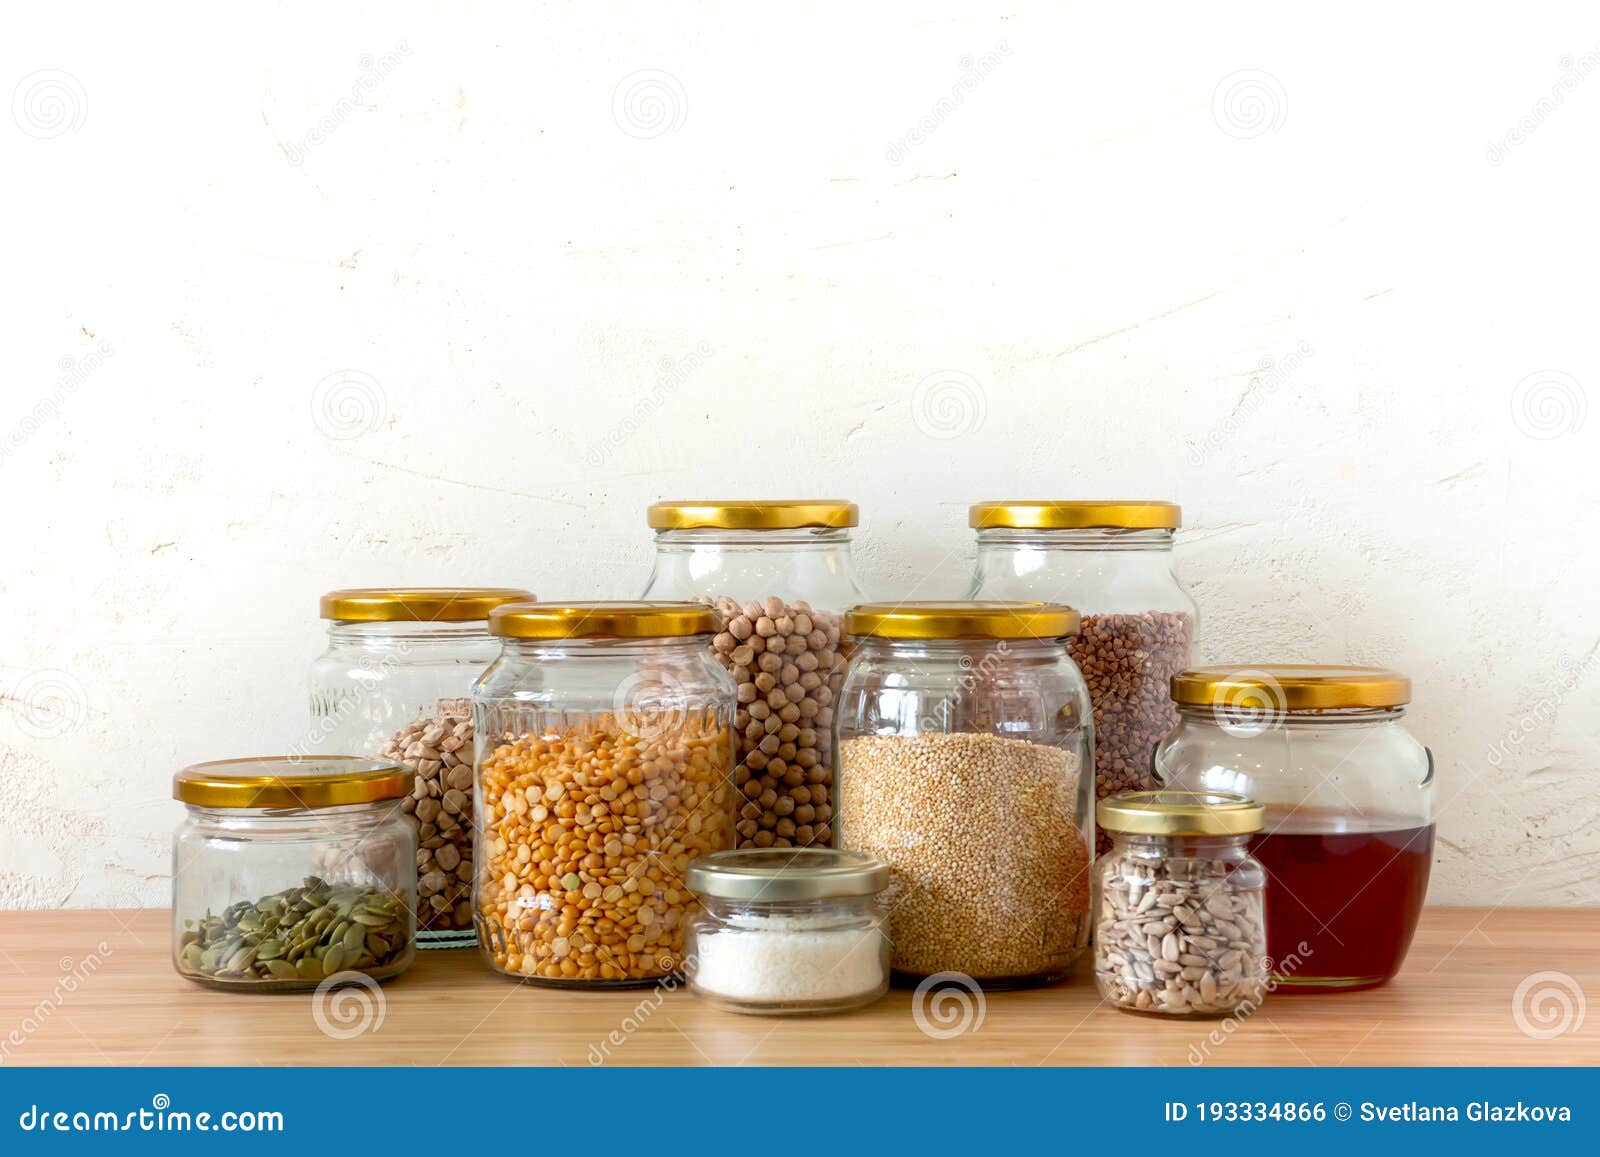 https://thumbs.dreamstime.com/z/organic-bio-bulk-products-zero-waste-shop-foods-storage-kitchen-low-waste-lifestyle-cereals-grains-glass-jars-193334866.jpg